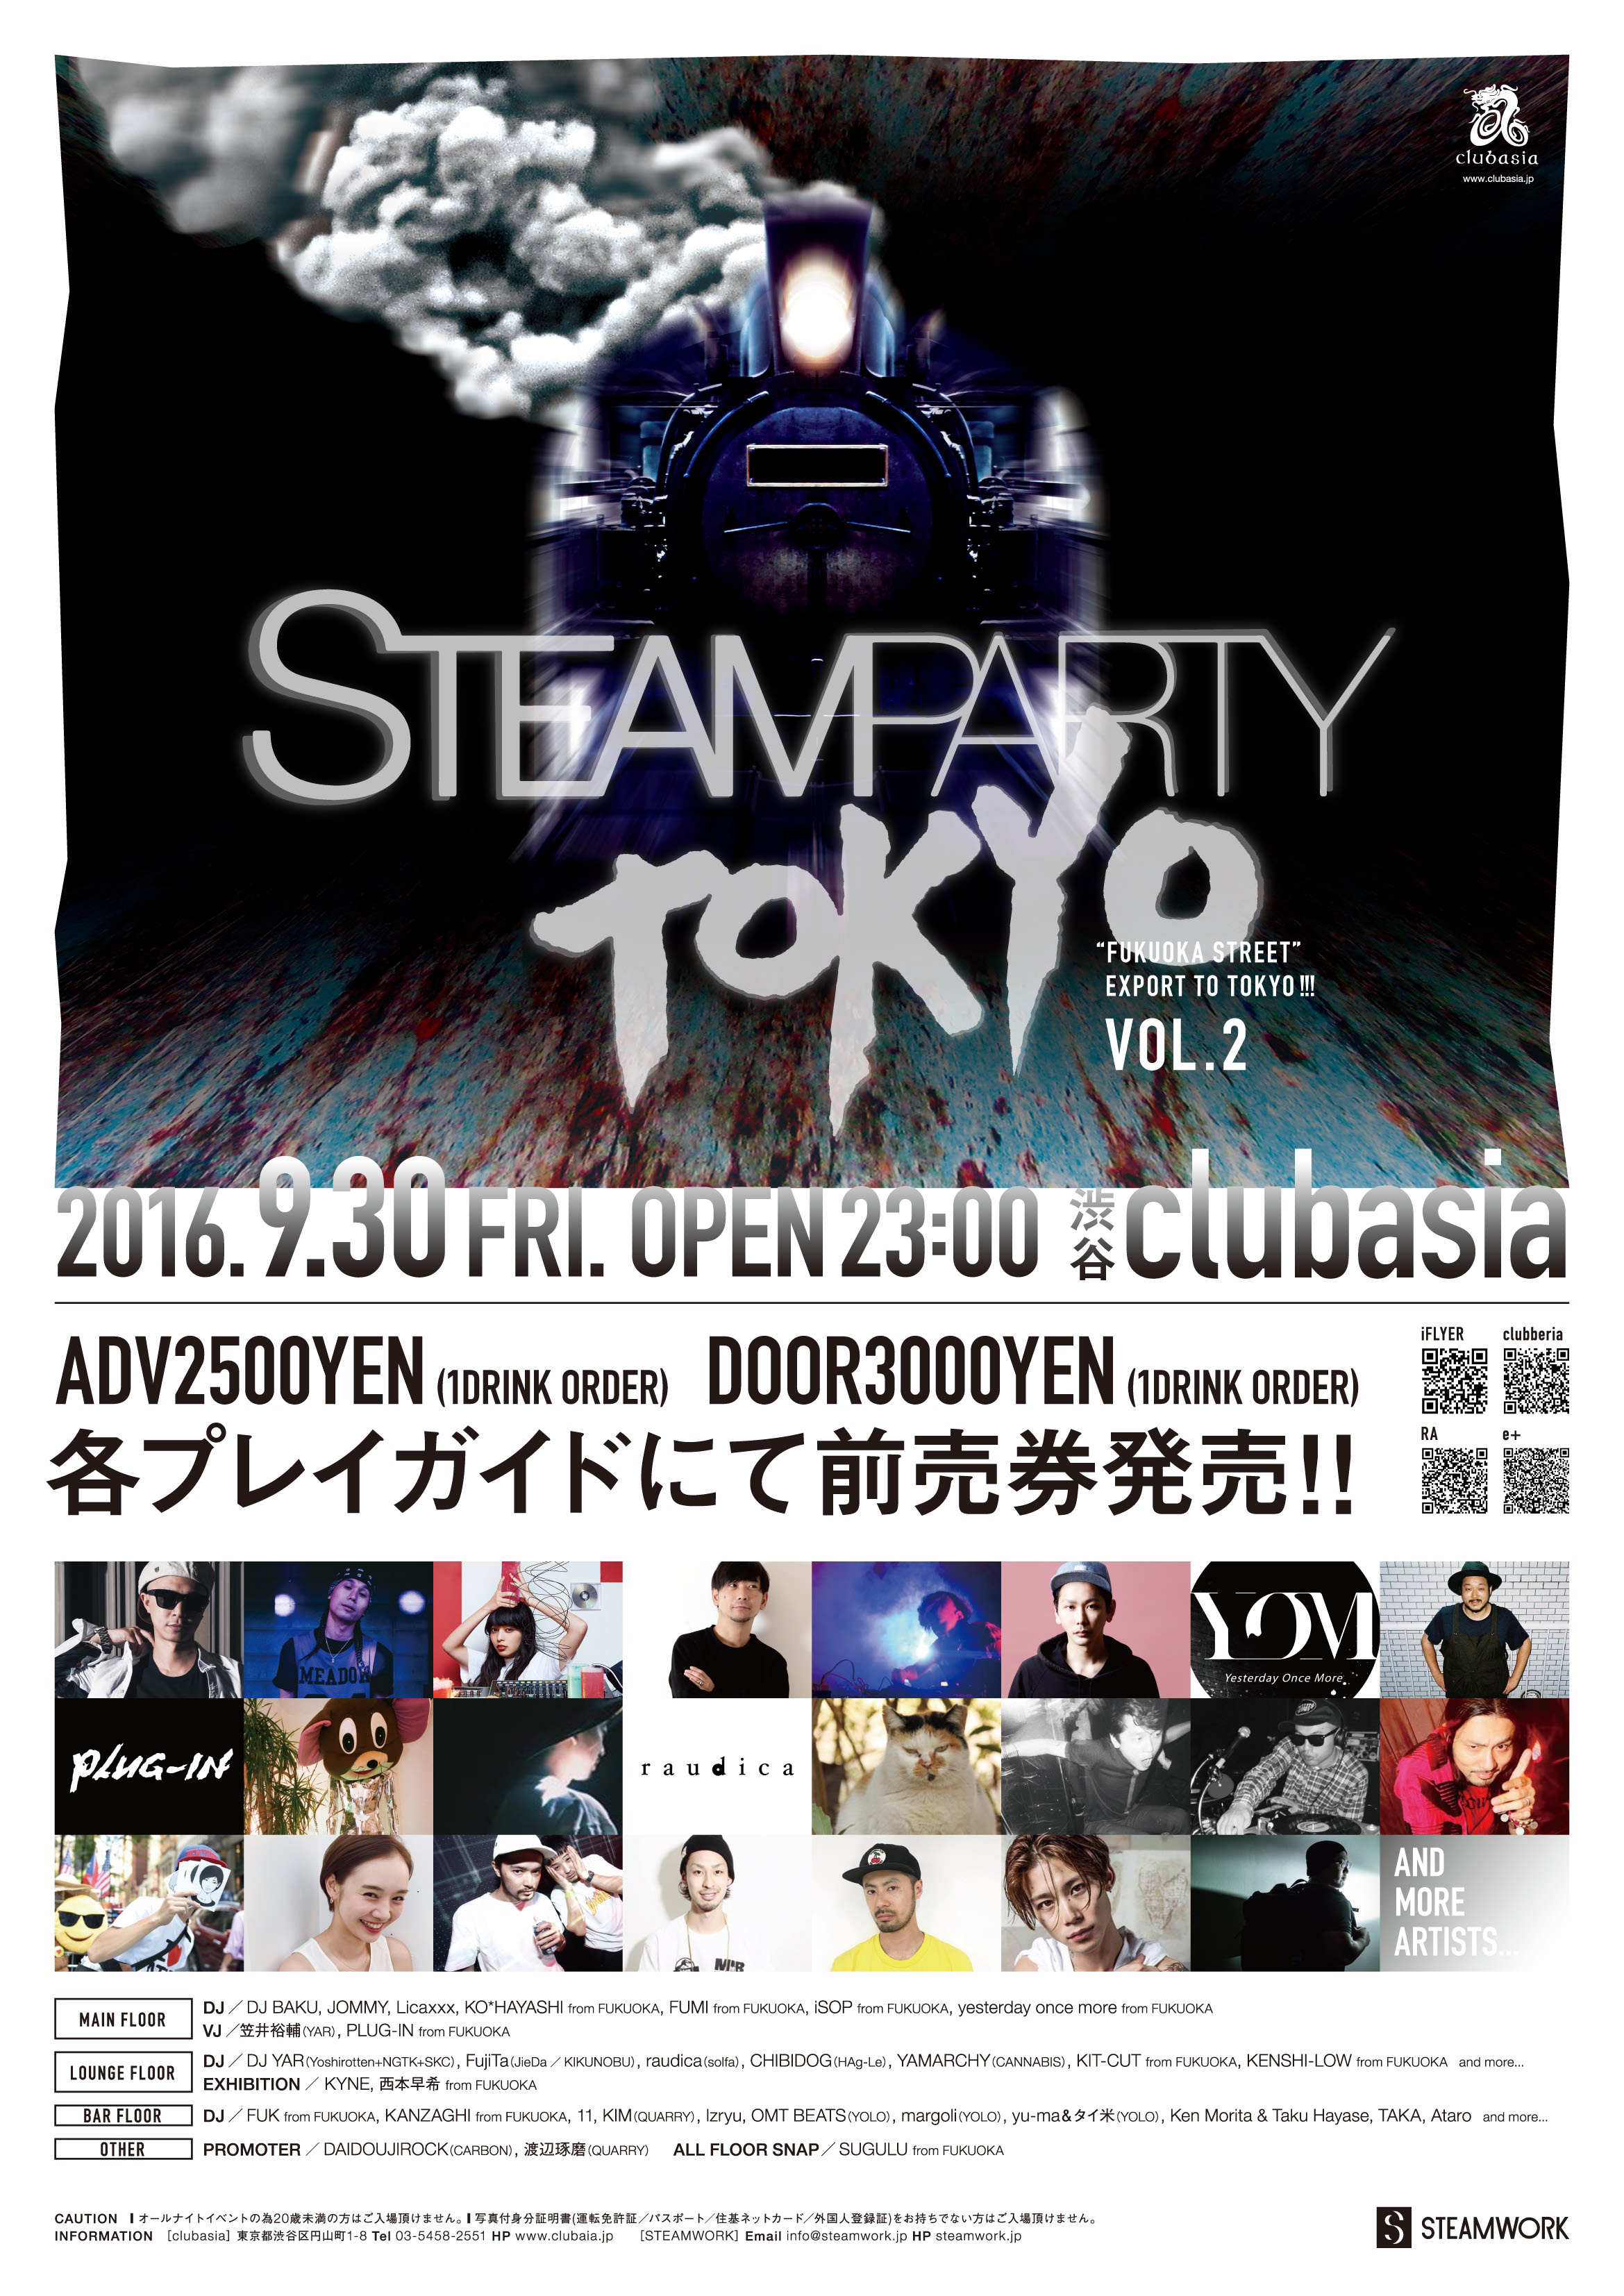 STEAM PARTY in TOKYO vol.2 〜“FUKUOKA STREET” EXPORT to TOKYO!!!〜